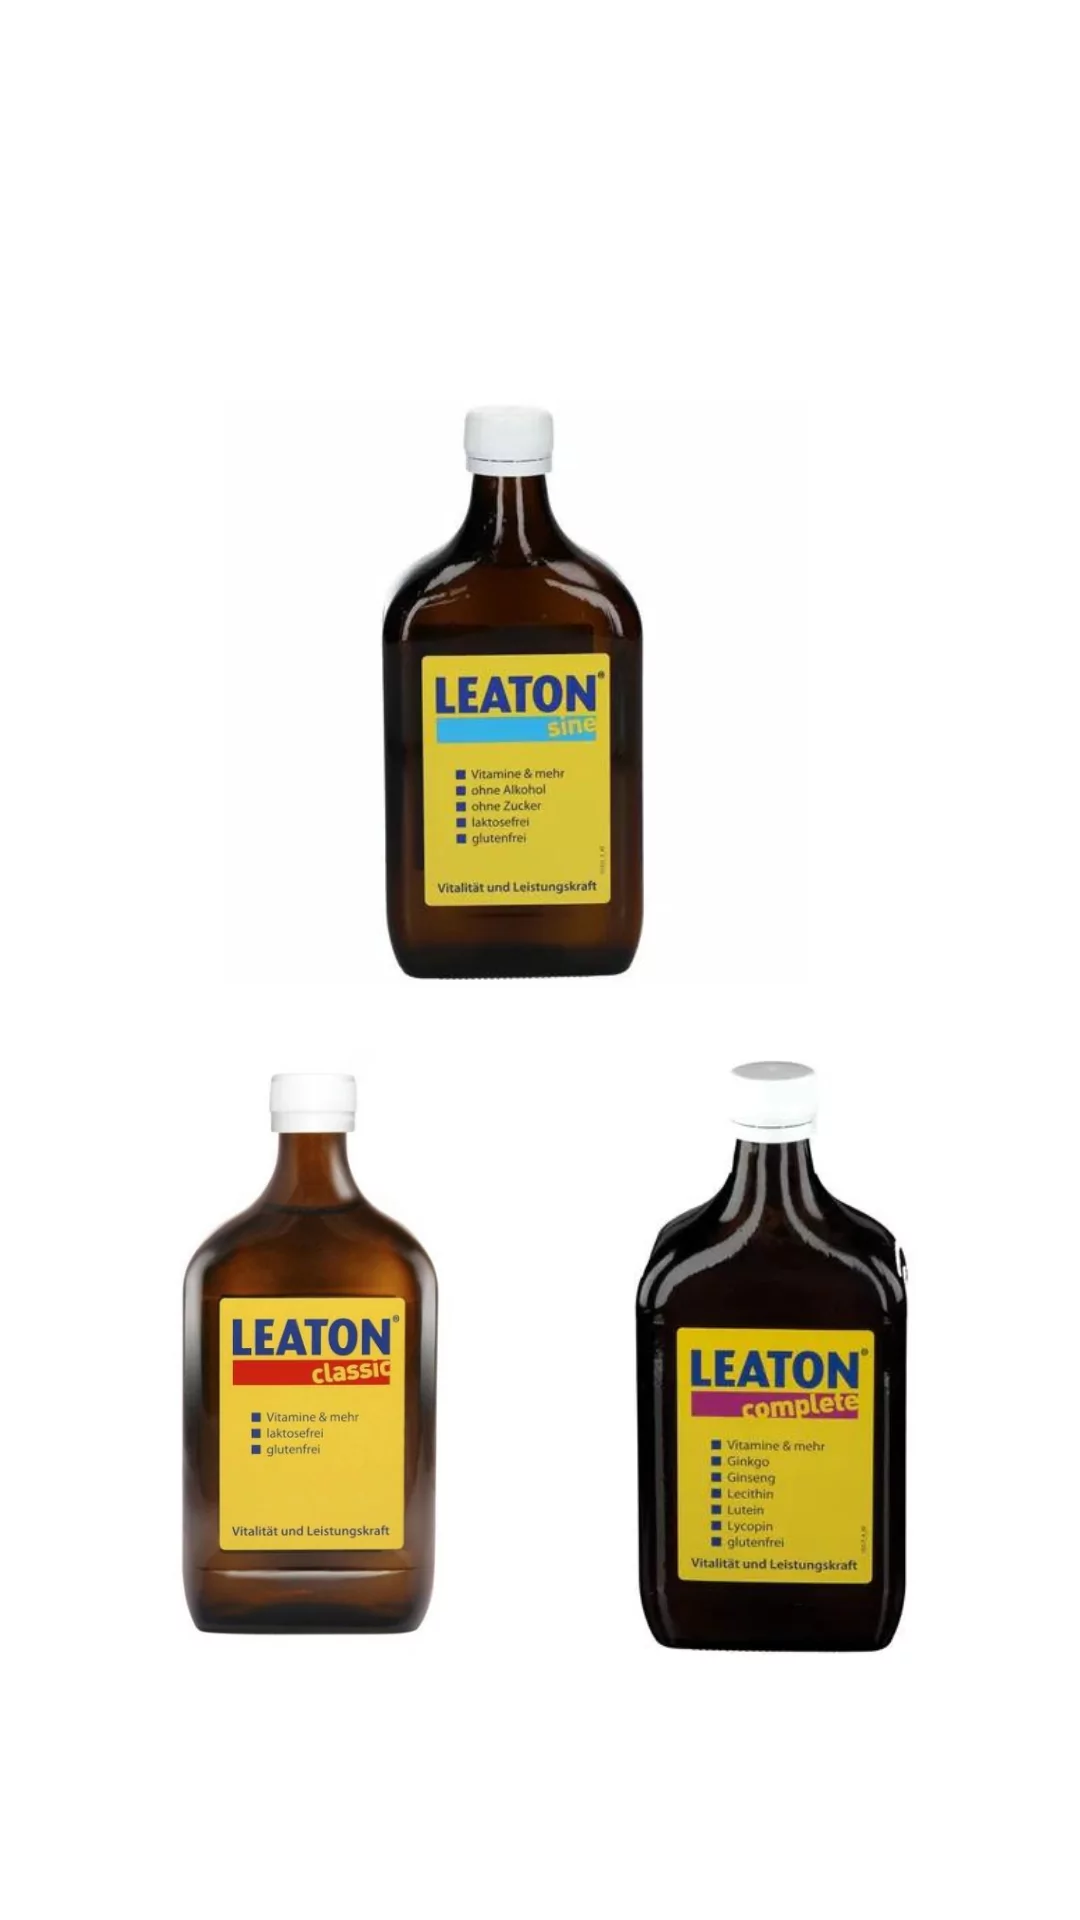 Leaton Produkte